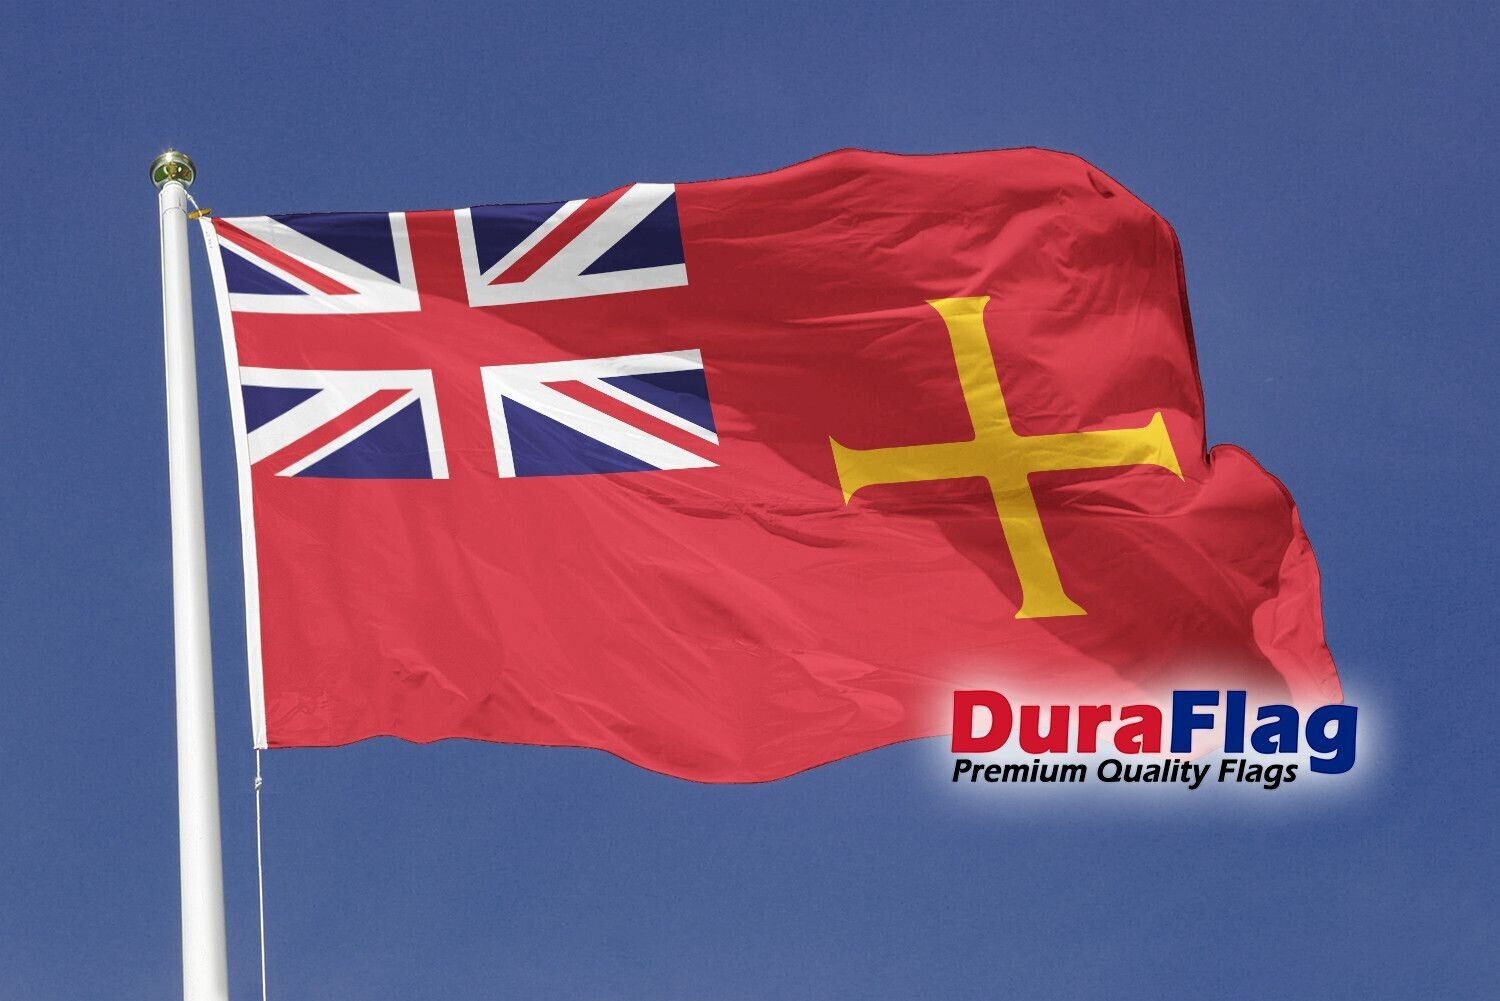 Civil Ensign of Guernsey Duraflag Premium Quality (20x12inch) Flag